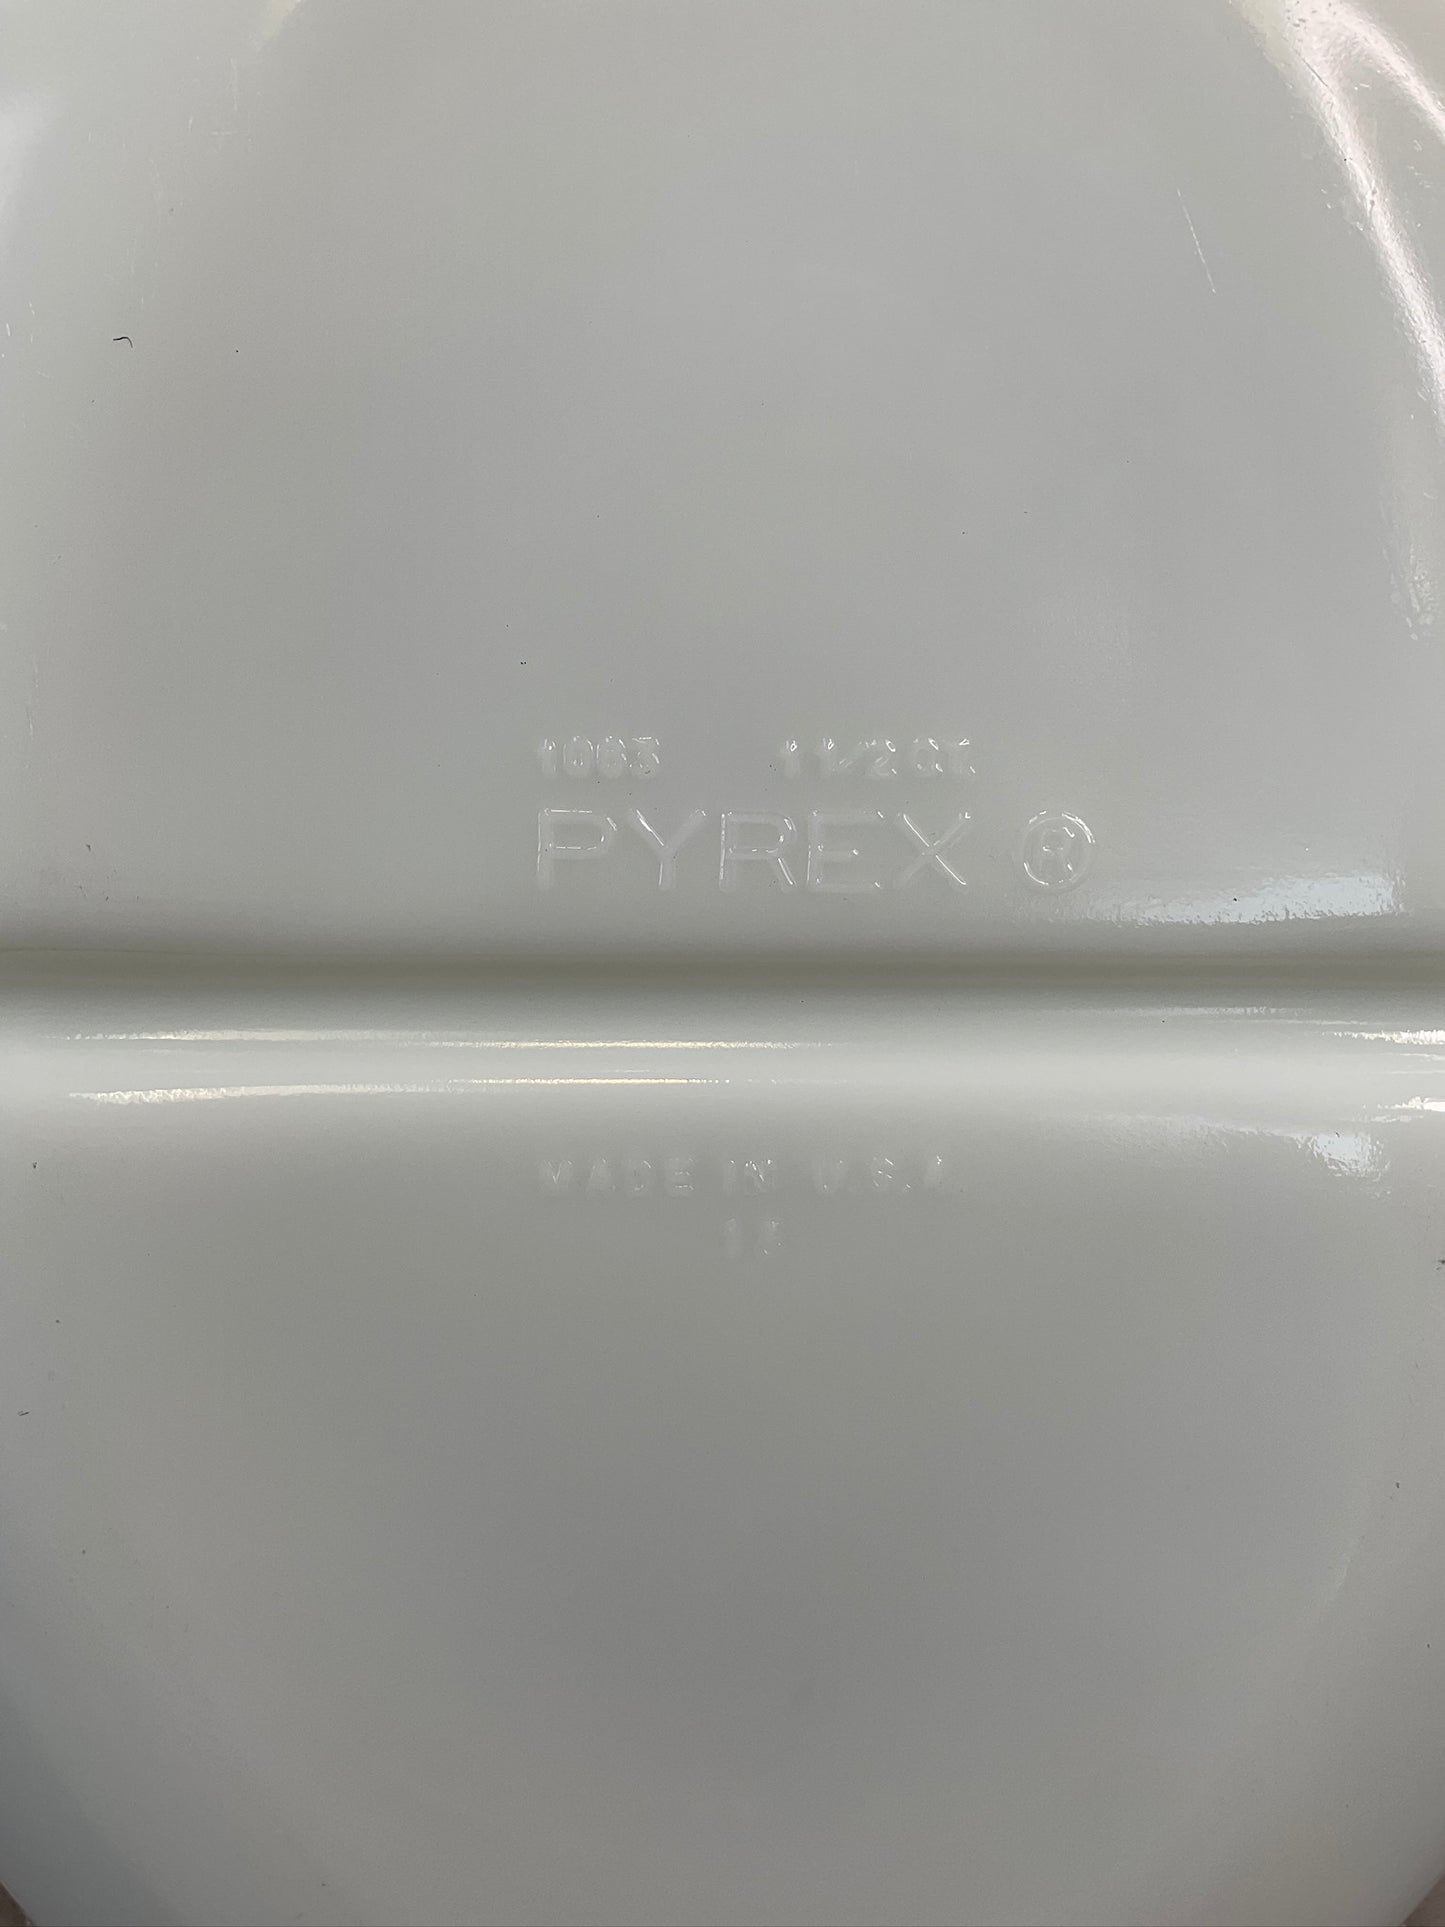 CLEARANCE Vintage Pyrex Milk Glass Divided Dish, 1.5 qt